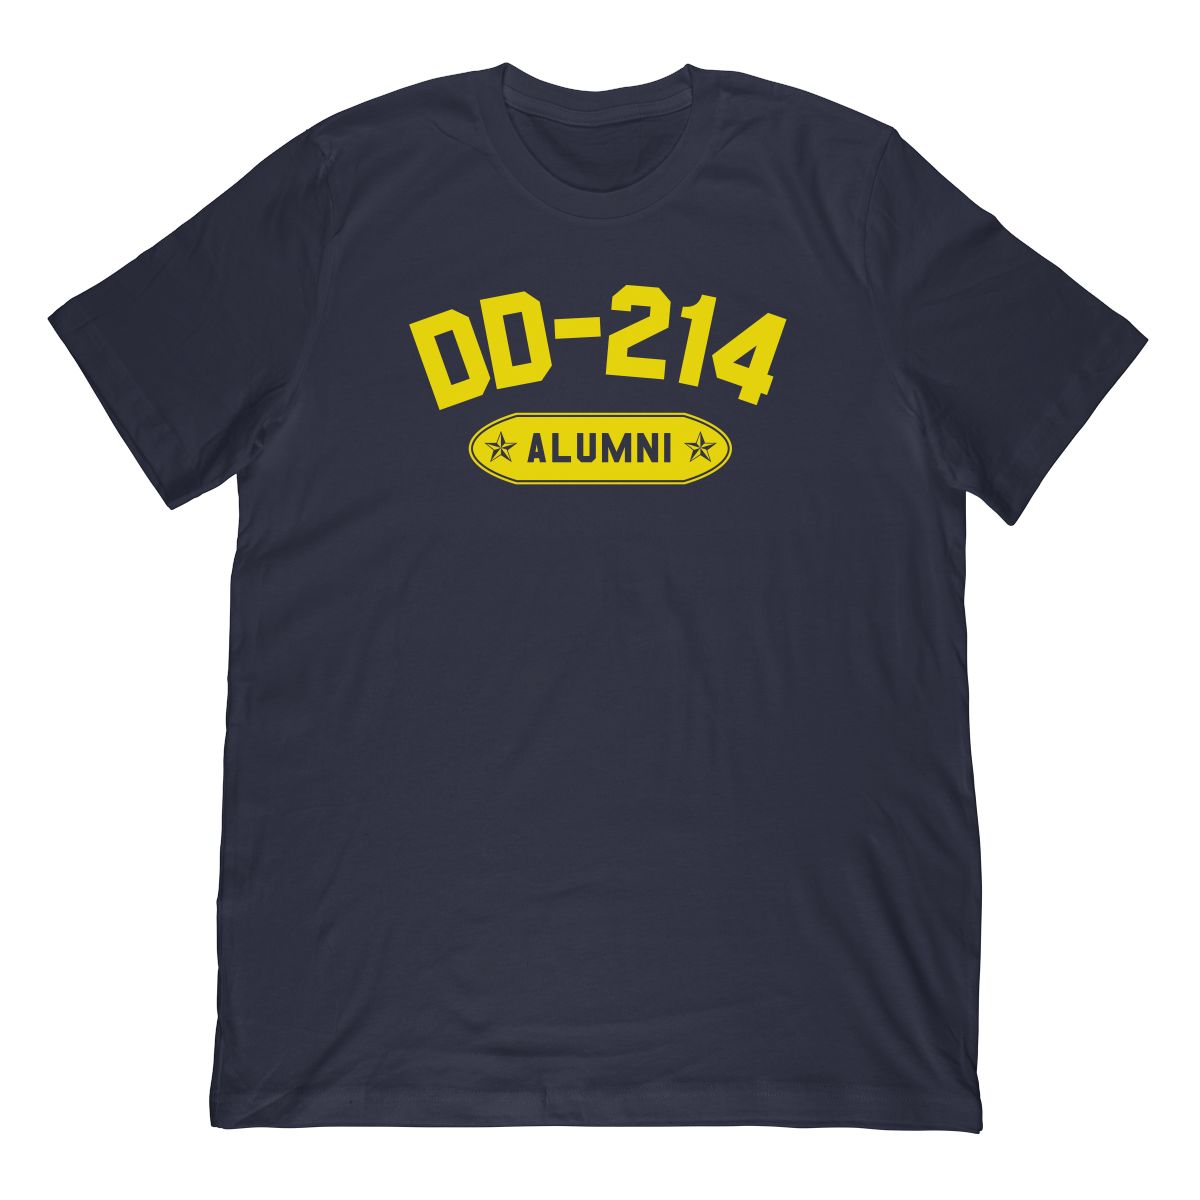 DD-214 Alumni In Yellow (Stamp Look) T-Shirt